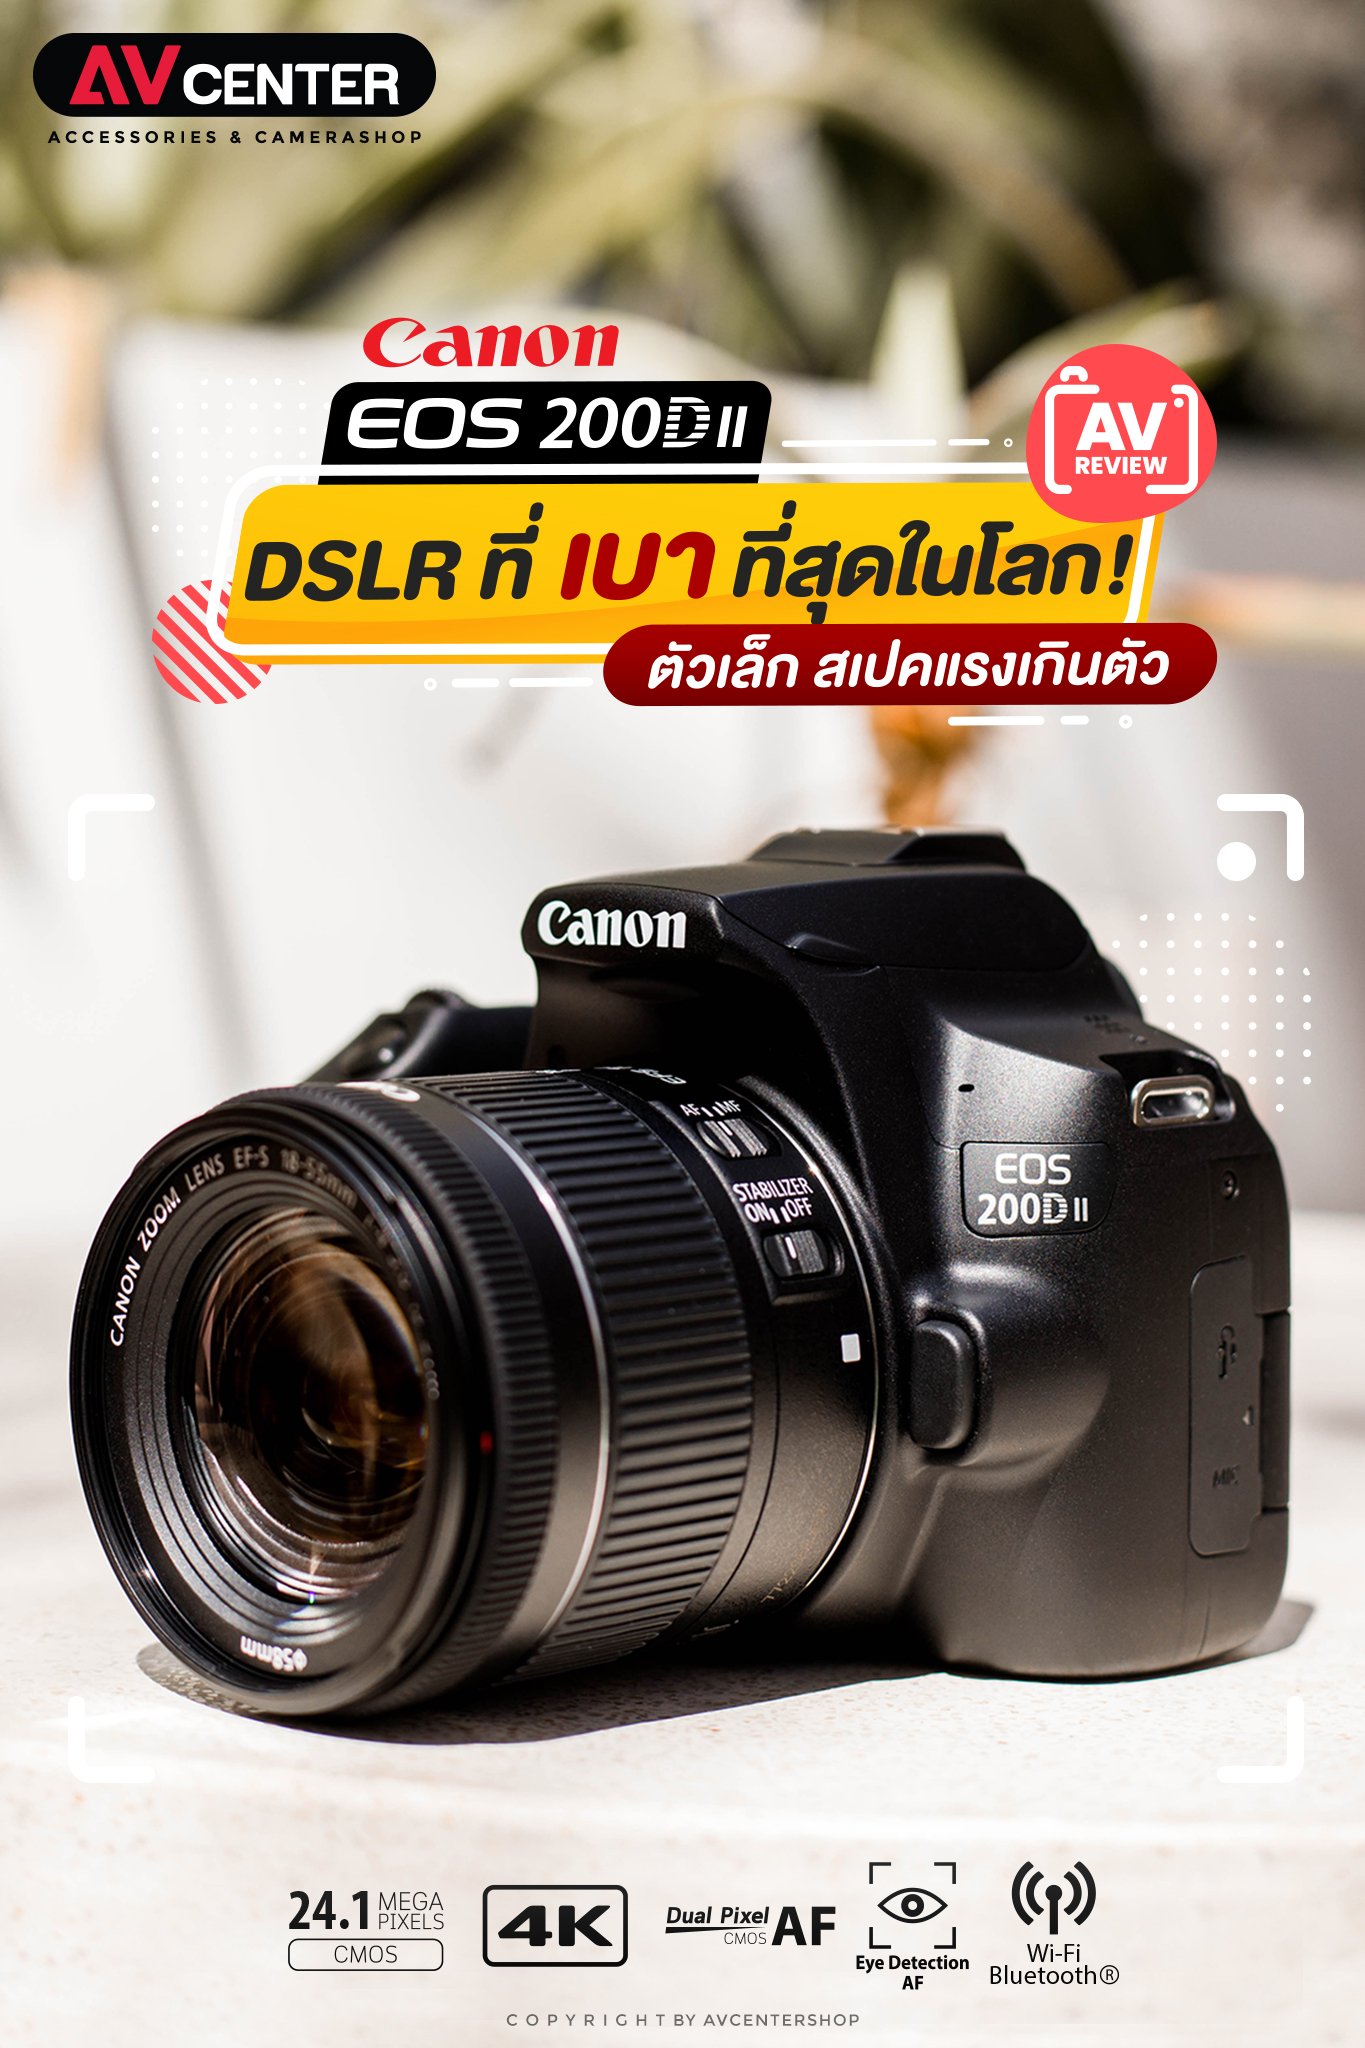 Canon EOS 200D II DSLR ที่เบาที่สุดในโลก (ตัวเล็ก สเปคแรงเกินตัว)